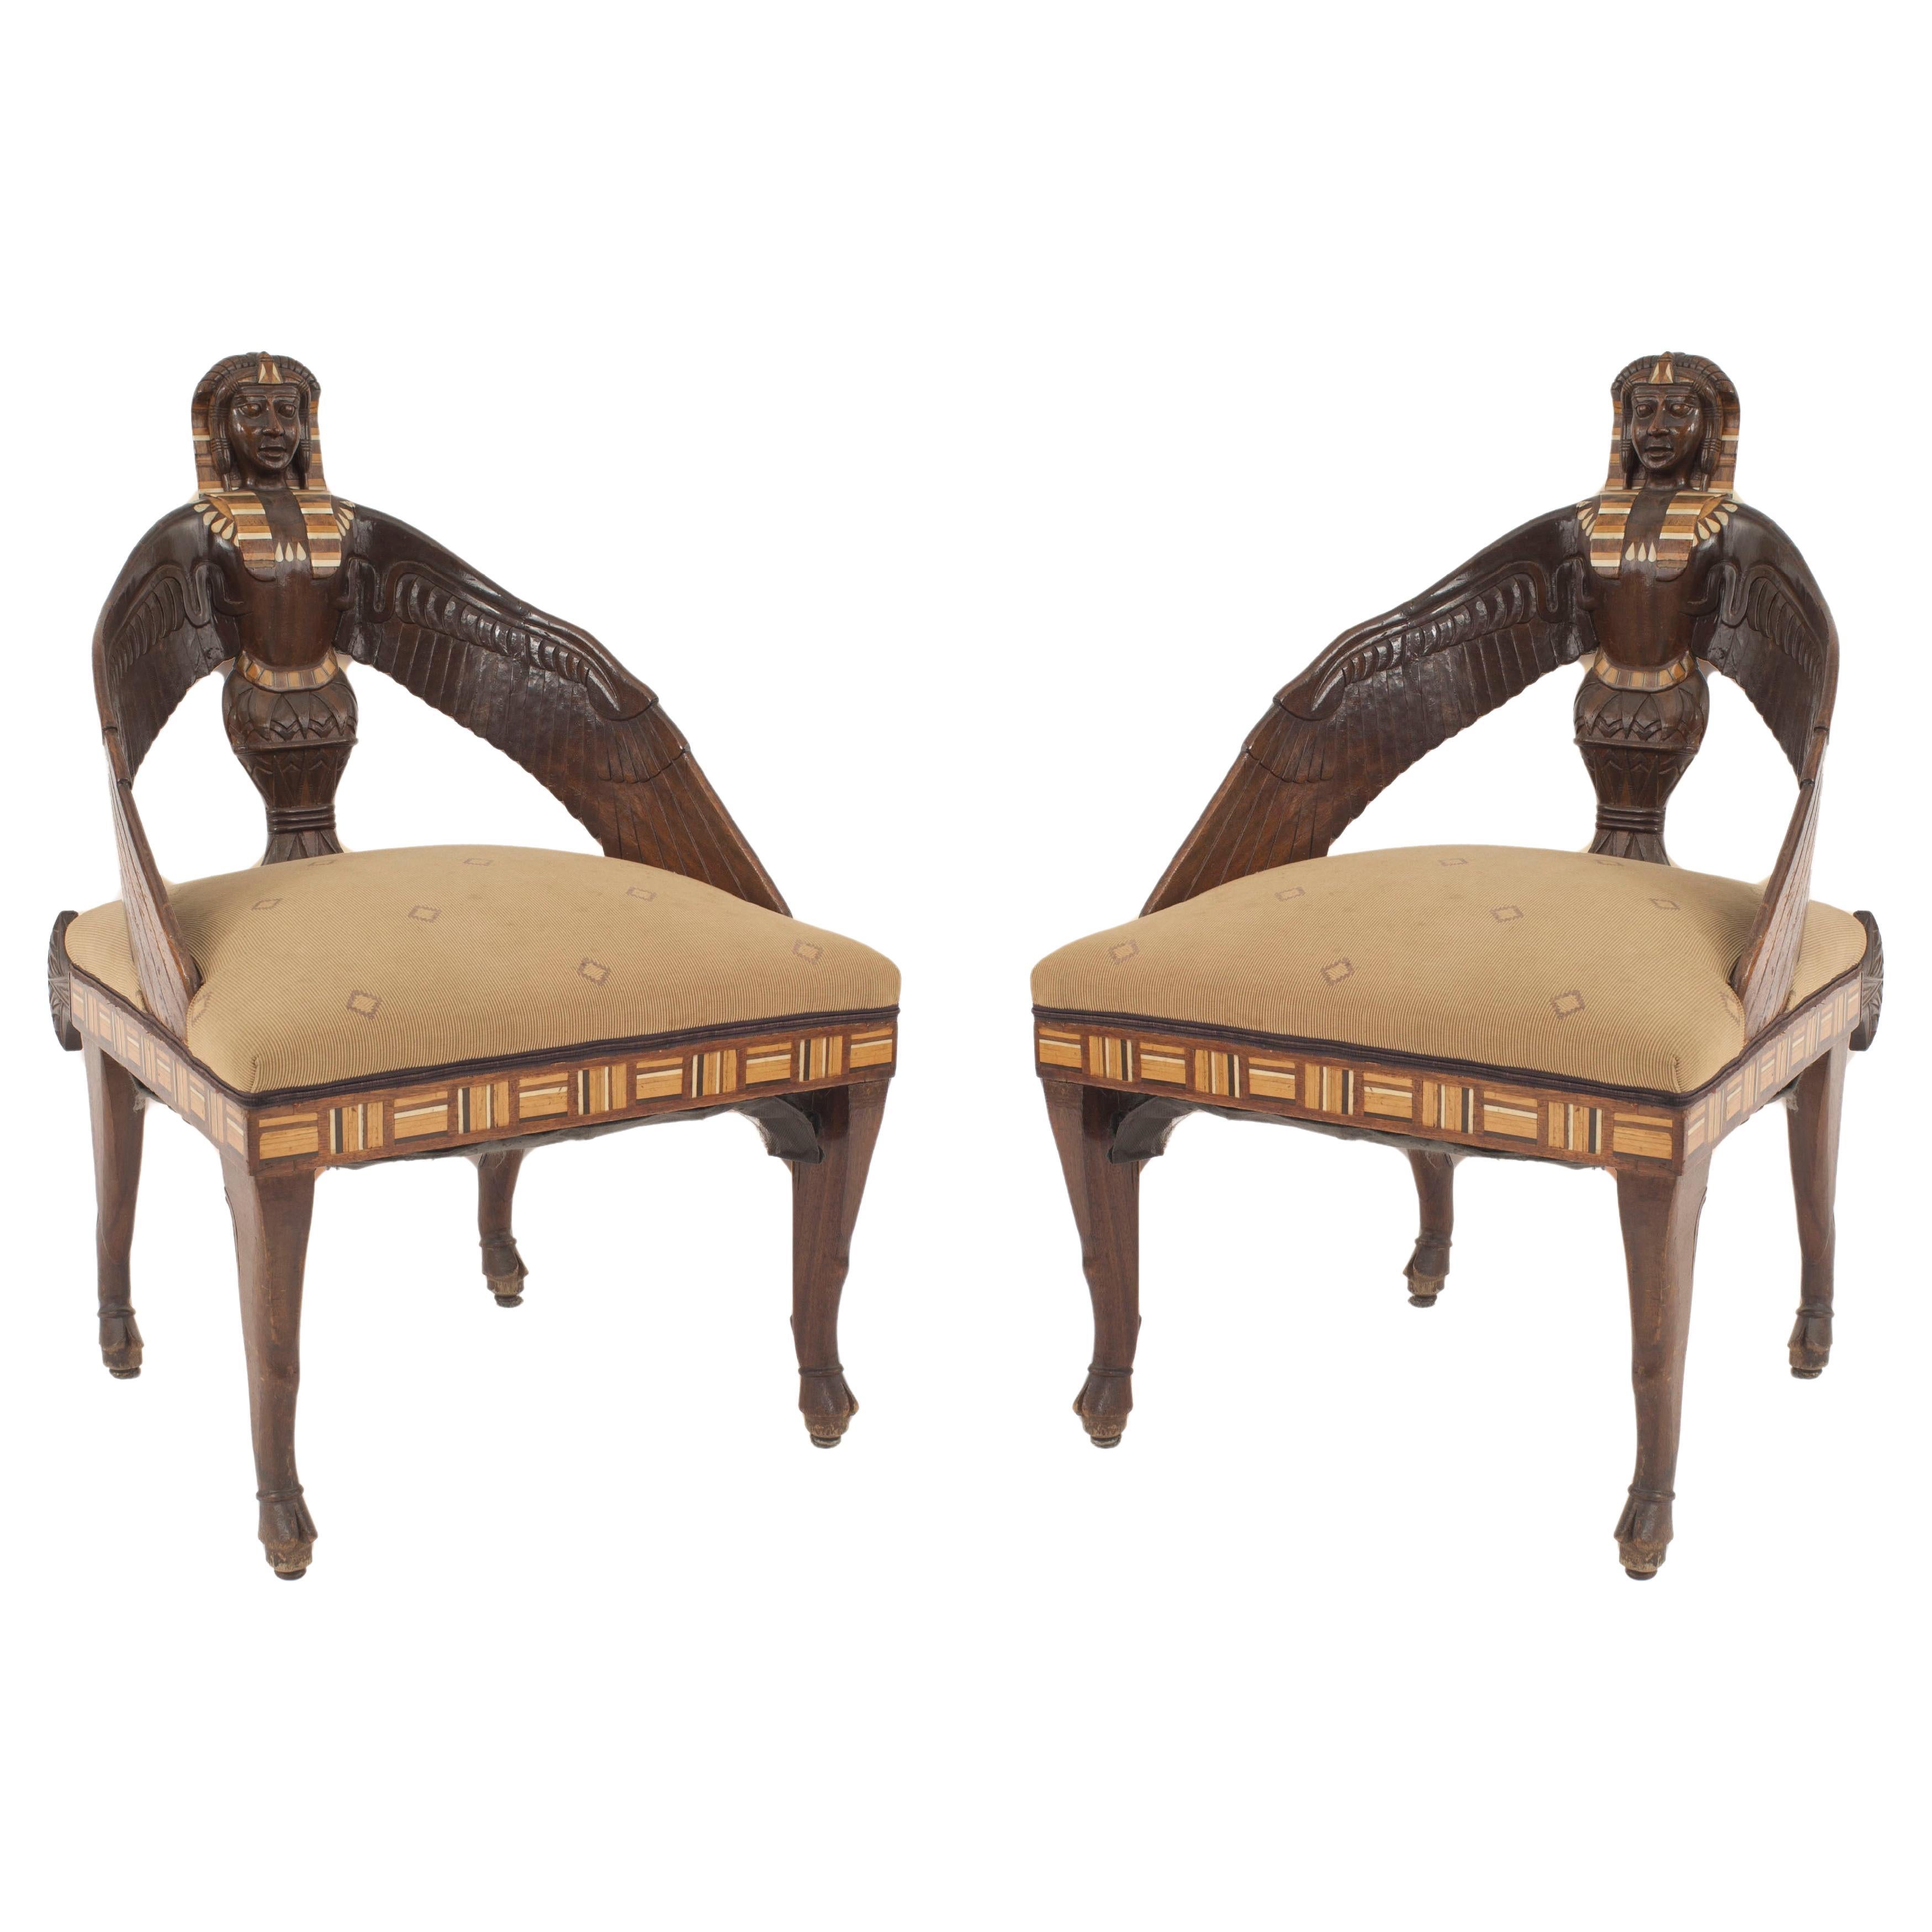 19th Century Egyptian Revival Macassar Ebony Chairs